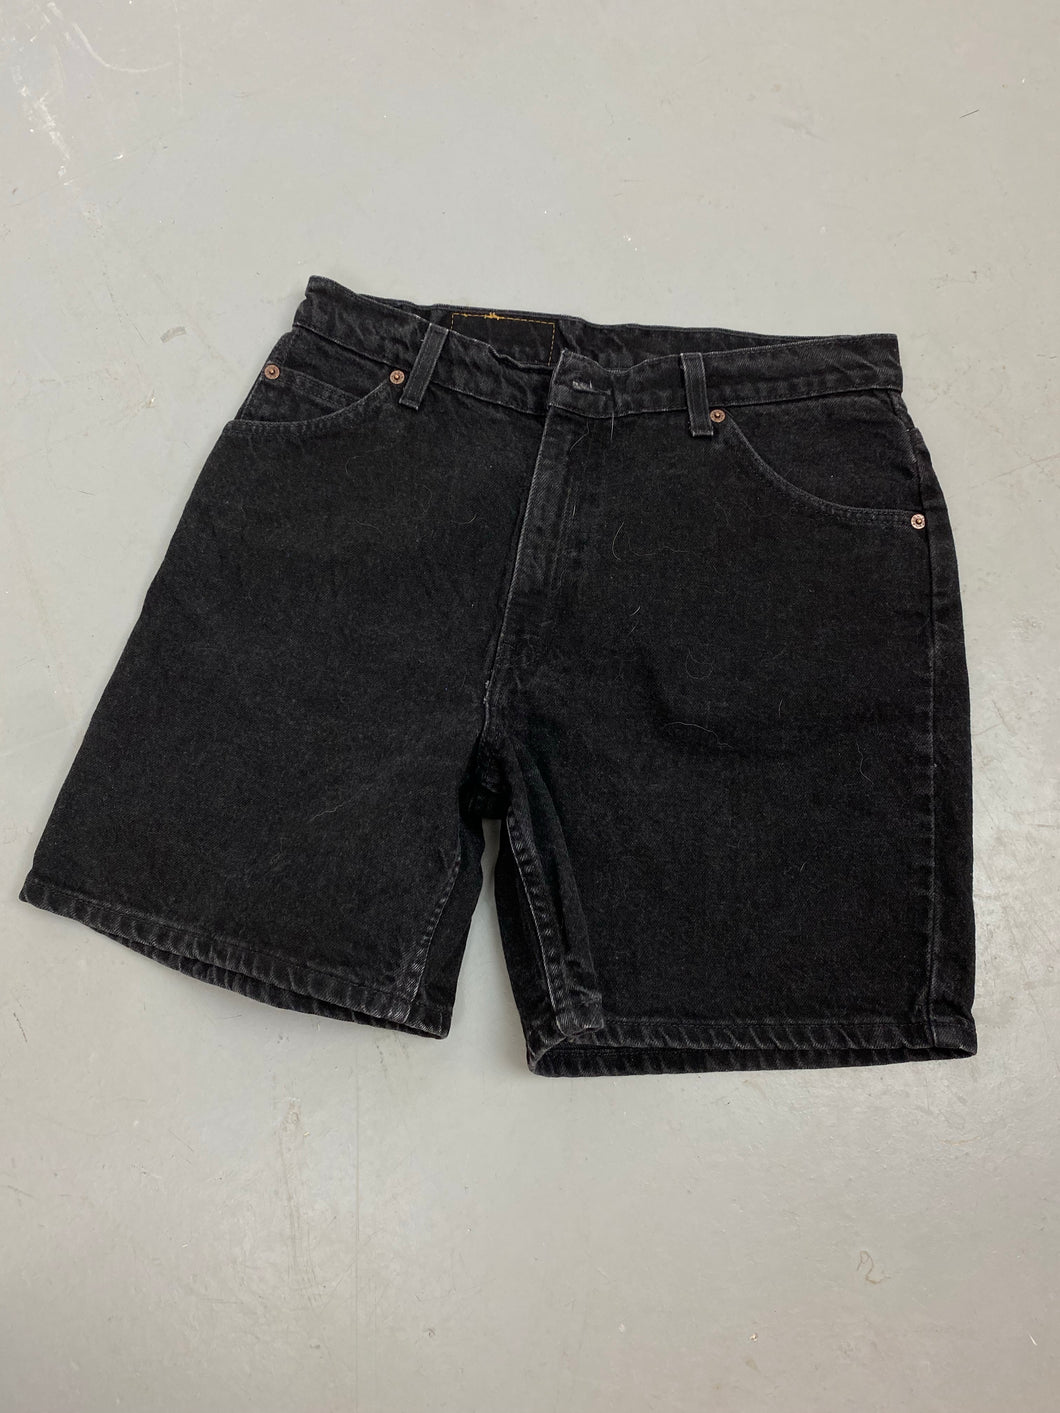 Vintage high waisted Levi’s denim shorts